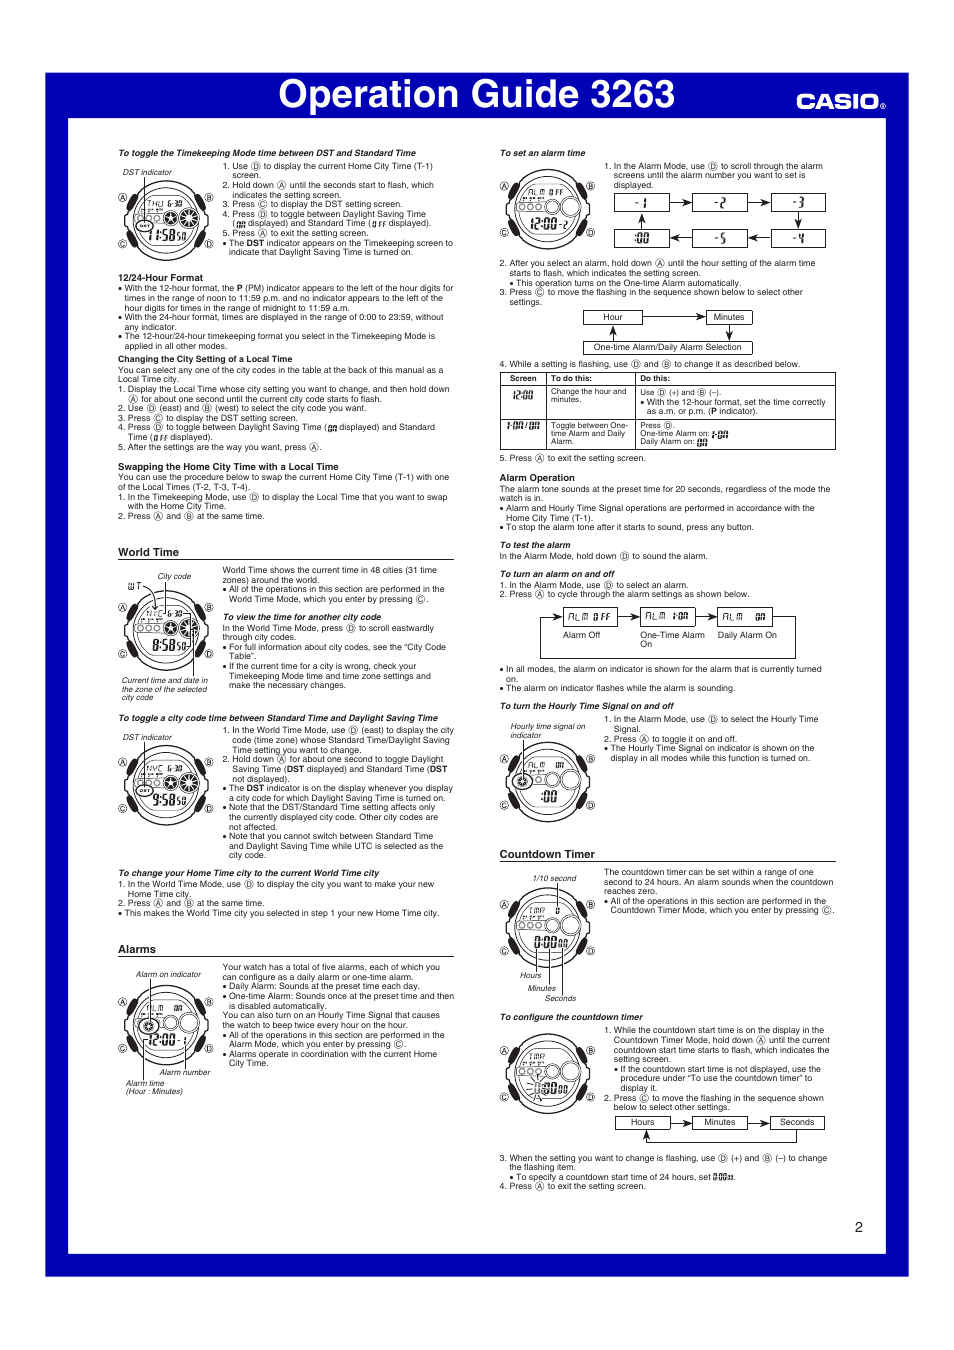 World time, Alarms, Countdown timer | G-Shock GD-100 User Manual | Page 2 /  4 | Original mode